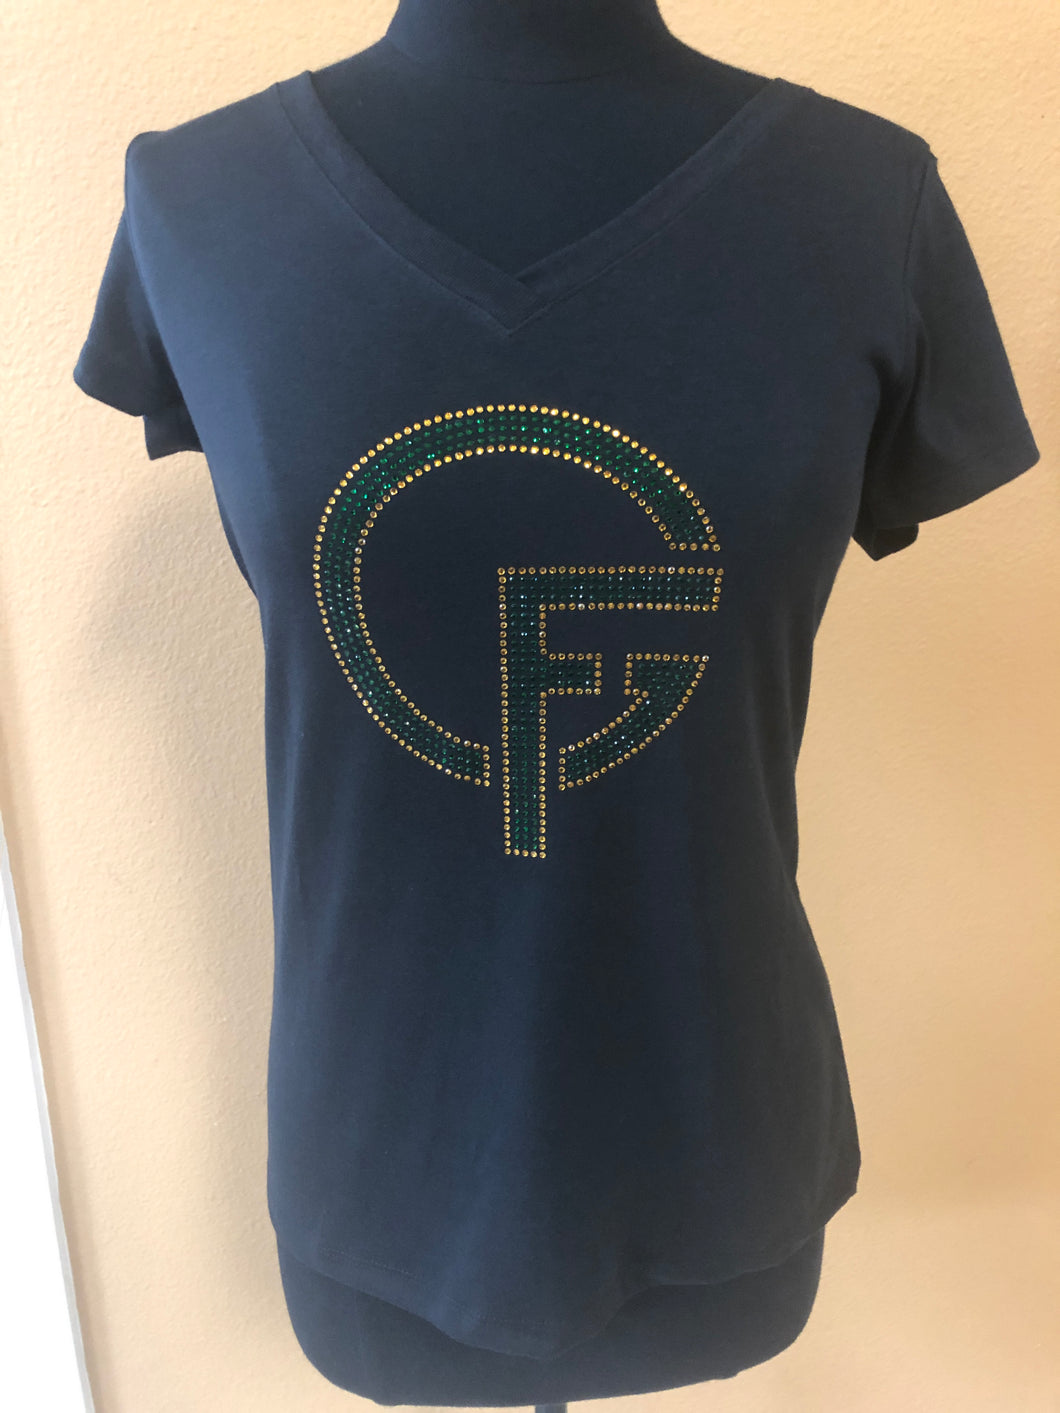 The Girl Friends Green/Gold Logo Rhinestone Shirt